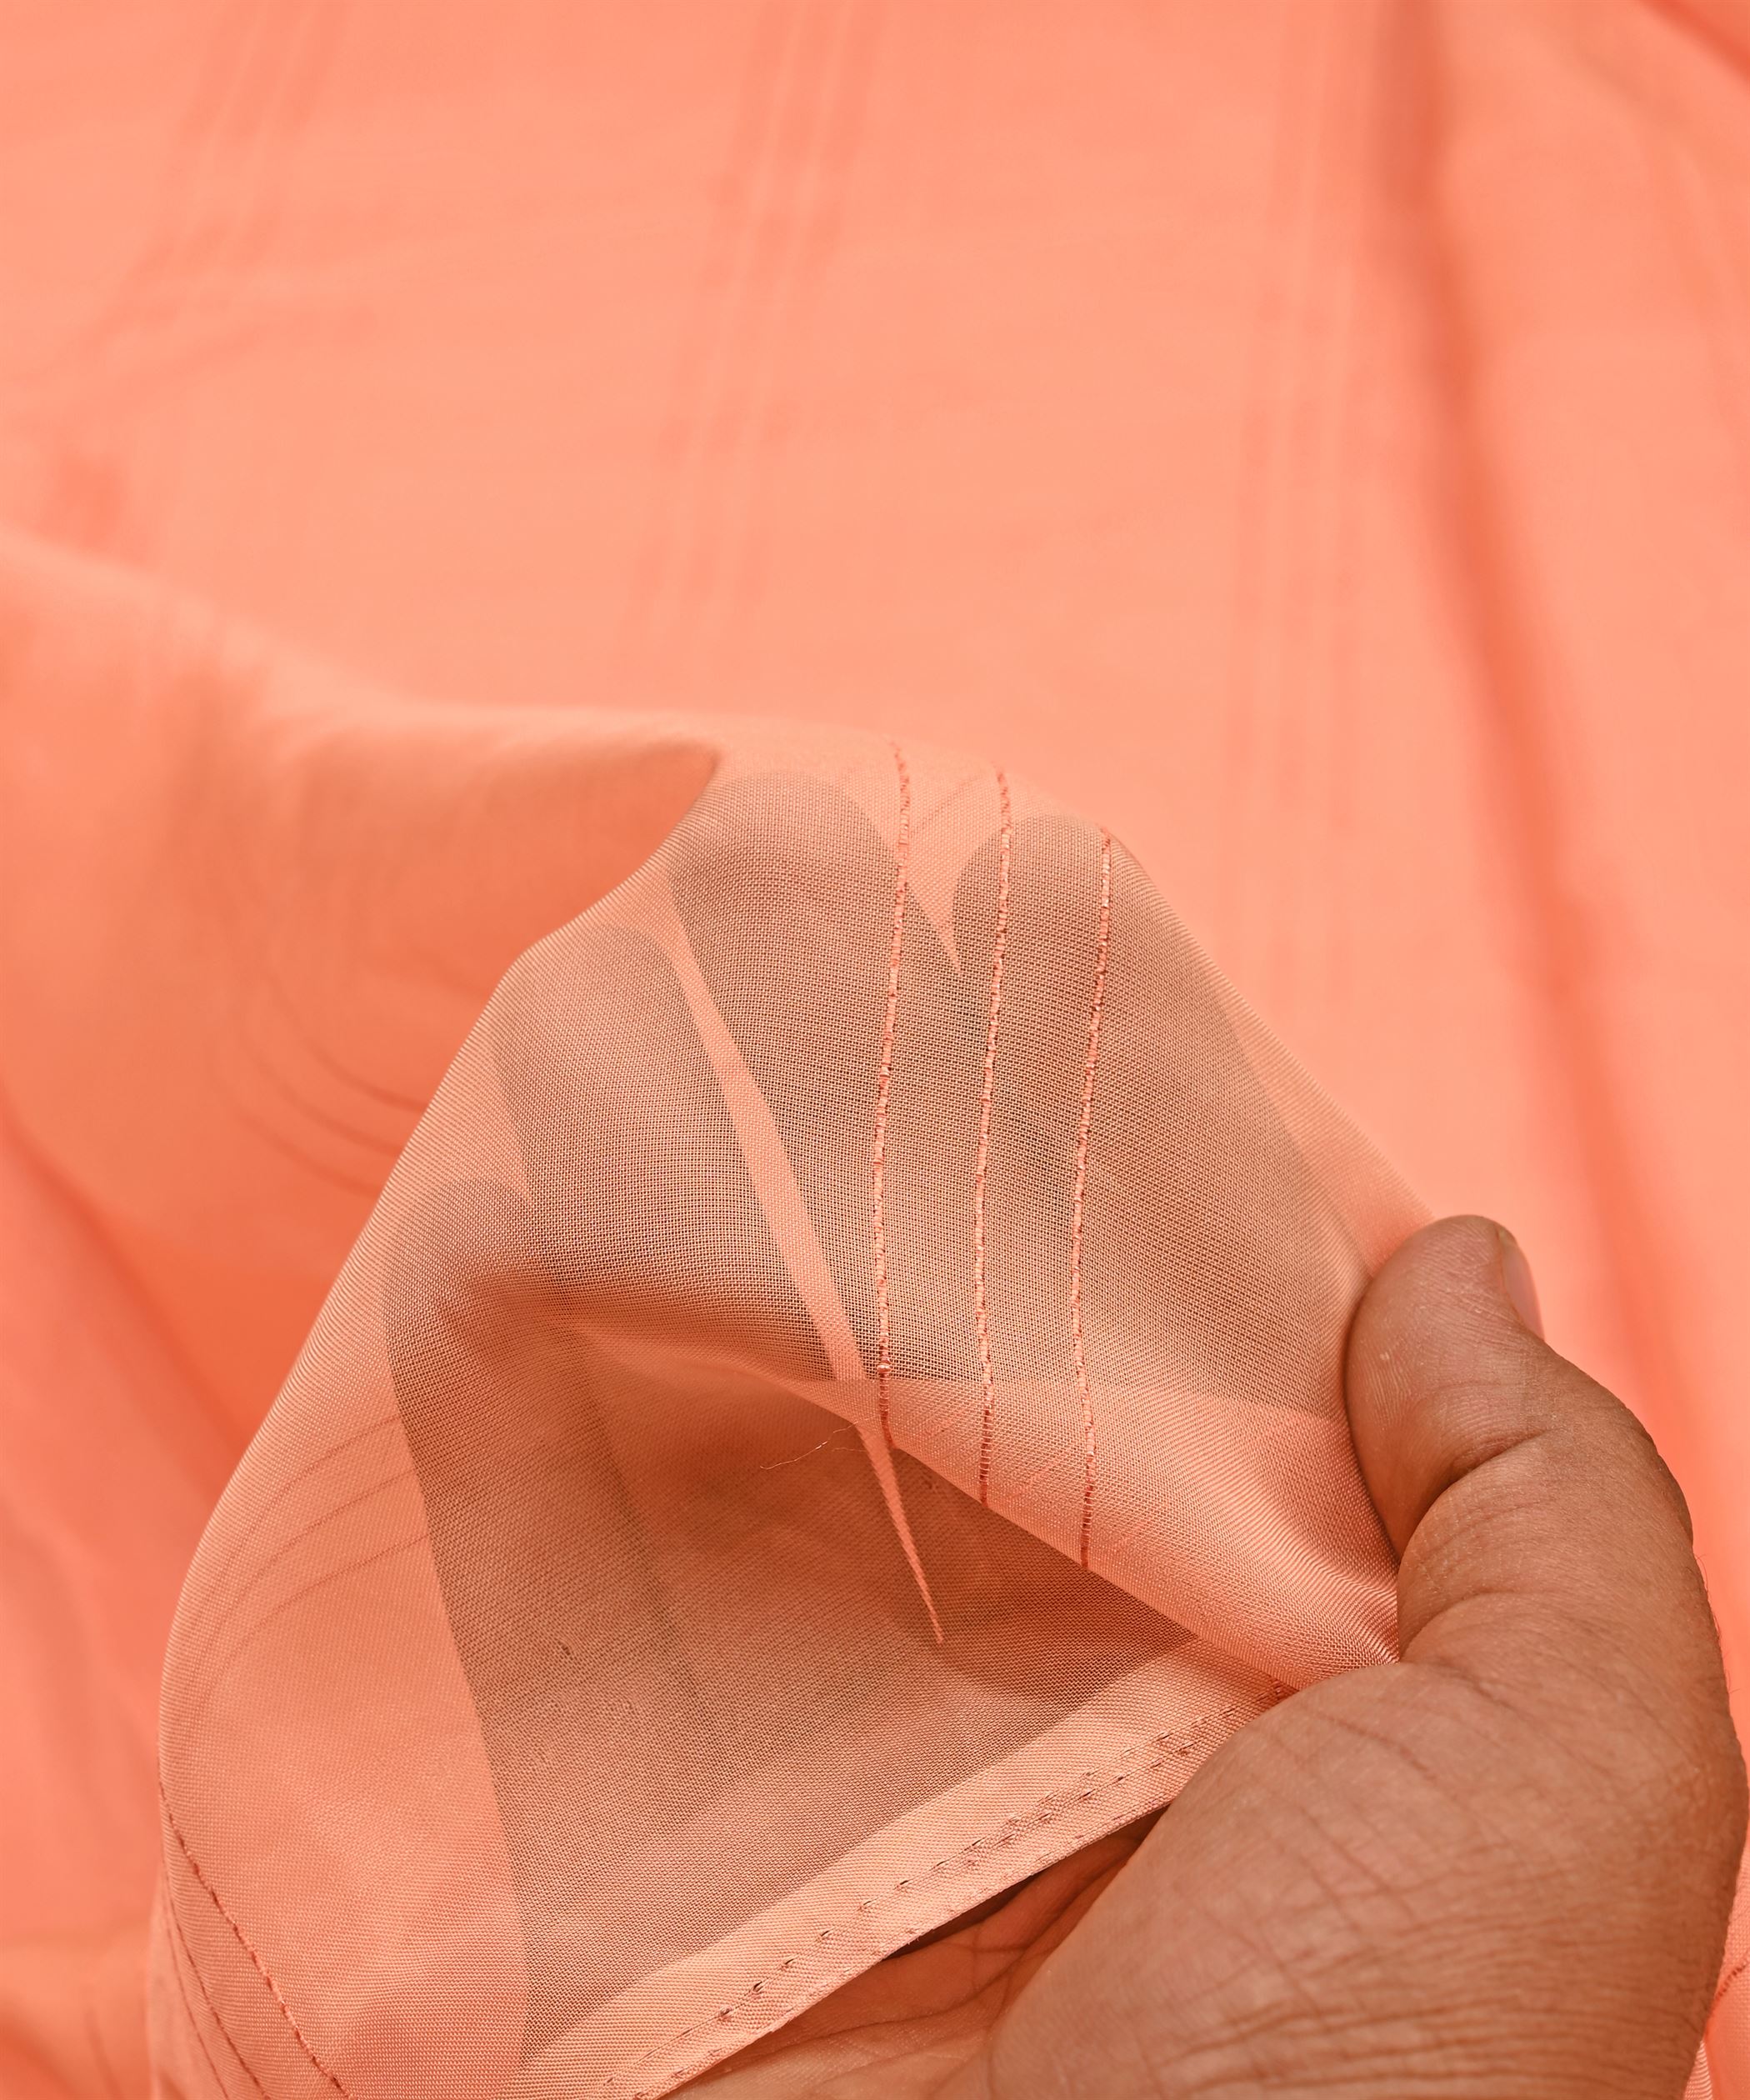 Peach Organza fabric with Lining